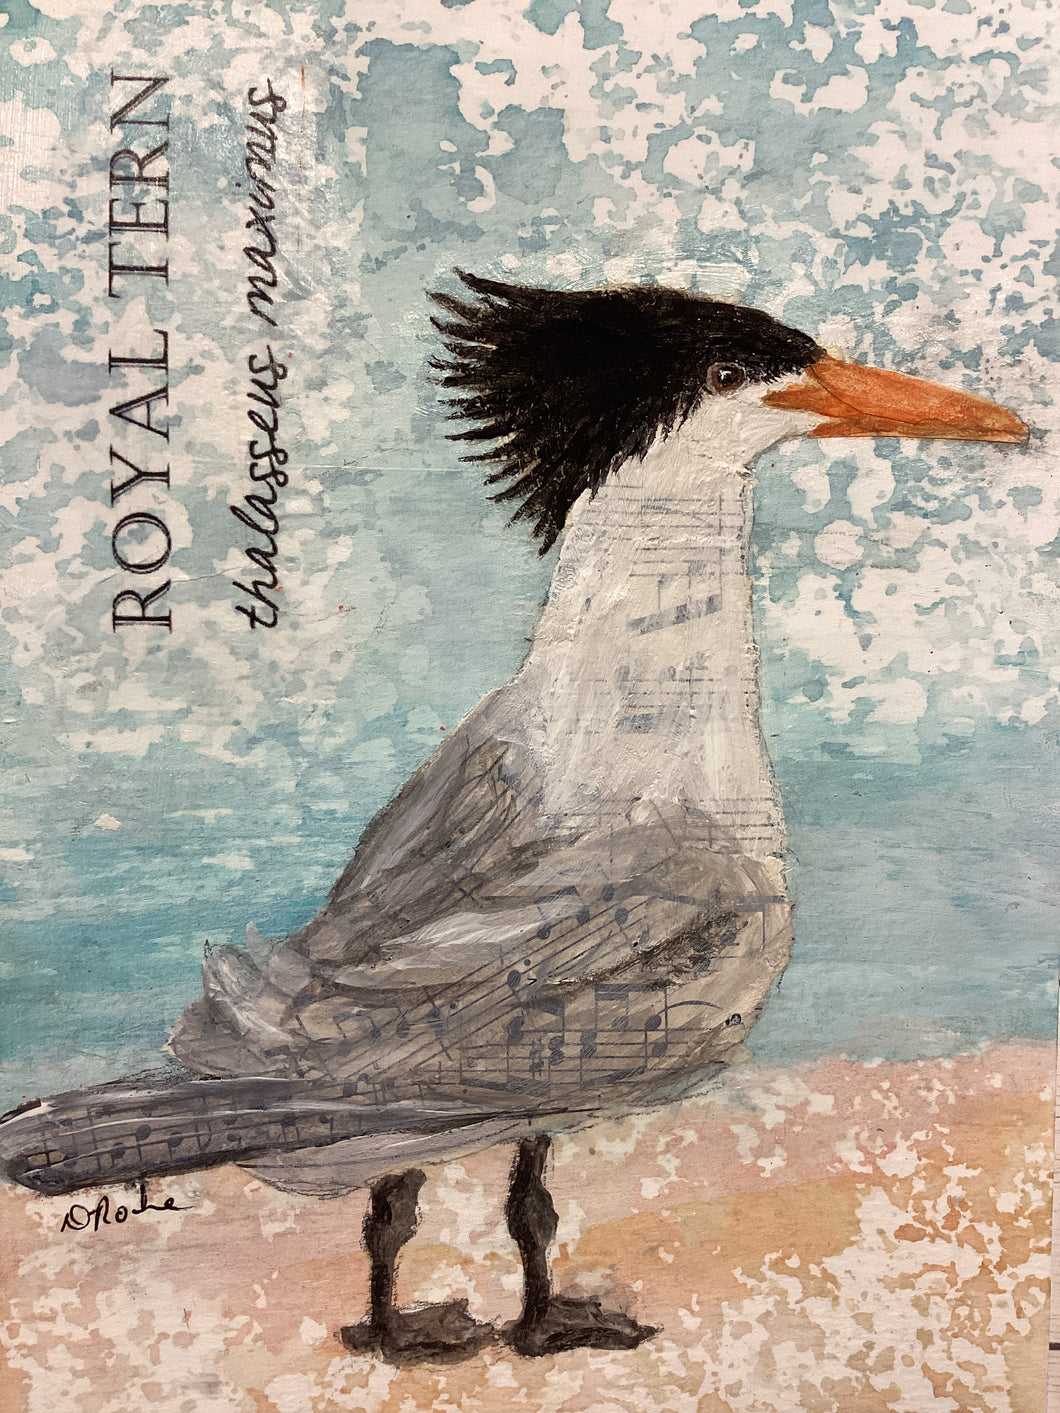 Royal Tern, 5x7 original mixed media painting, Day 30 0f 100